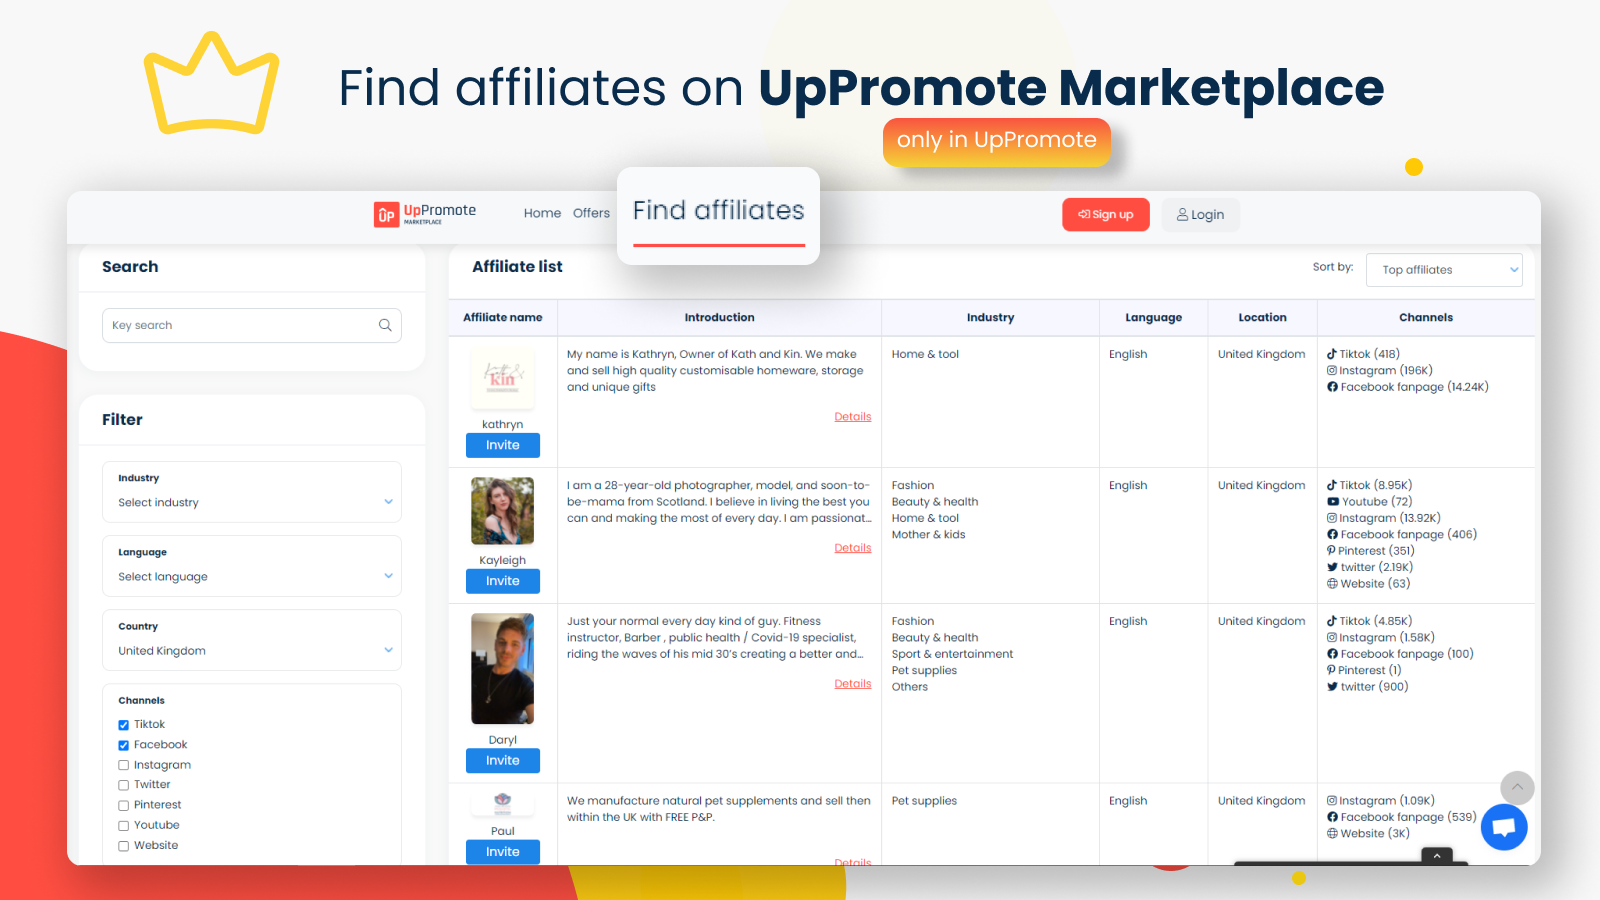 Find affiliates on UpPromote Marketplace